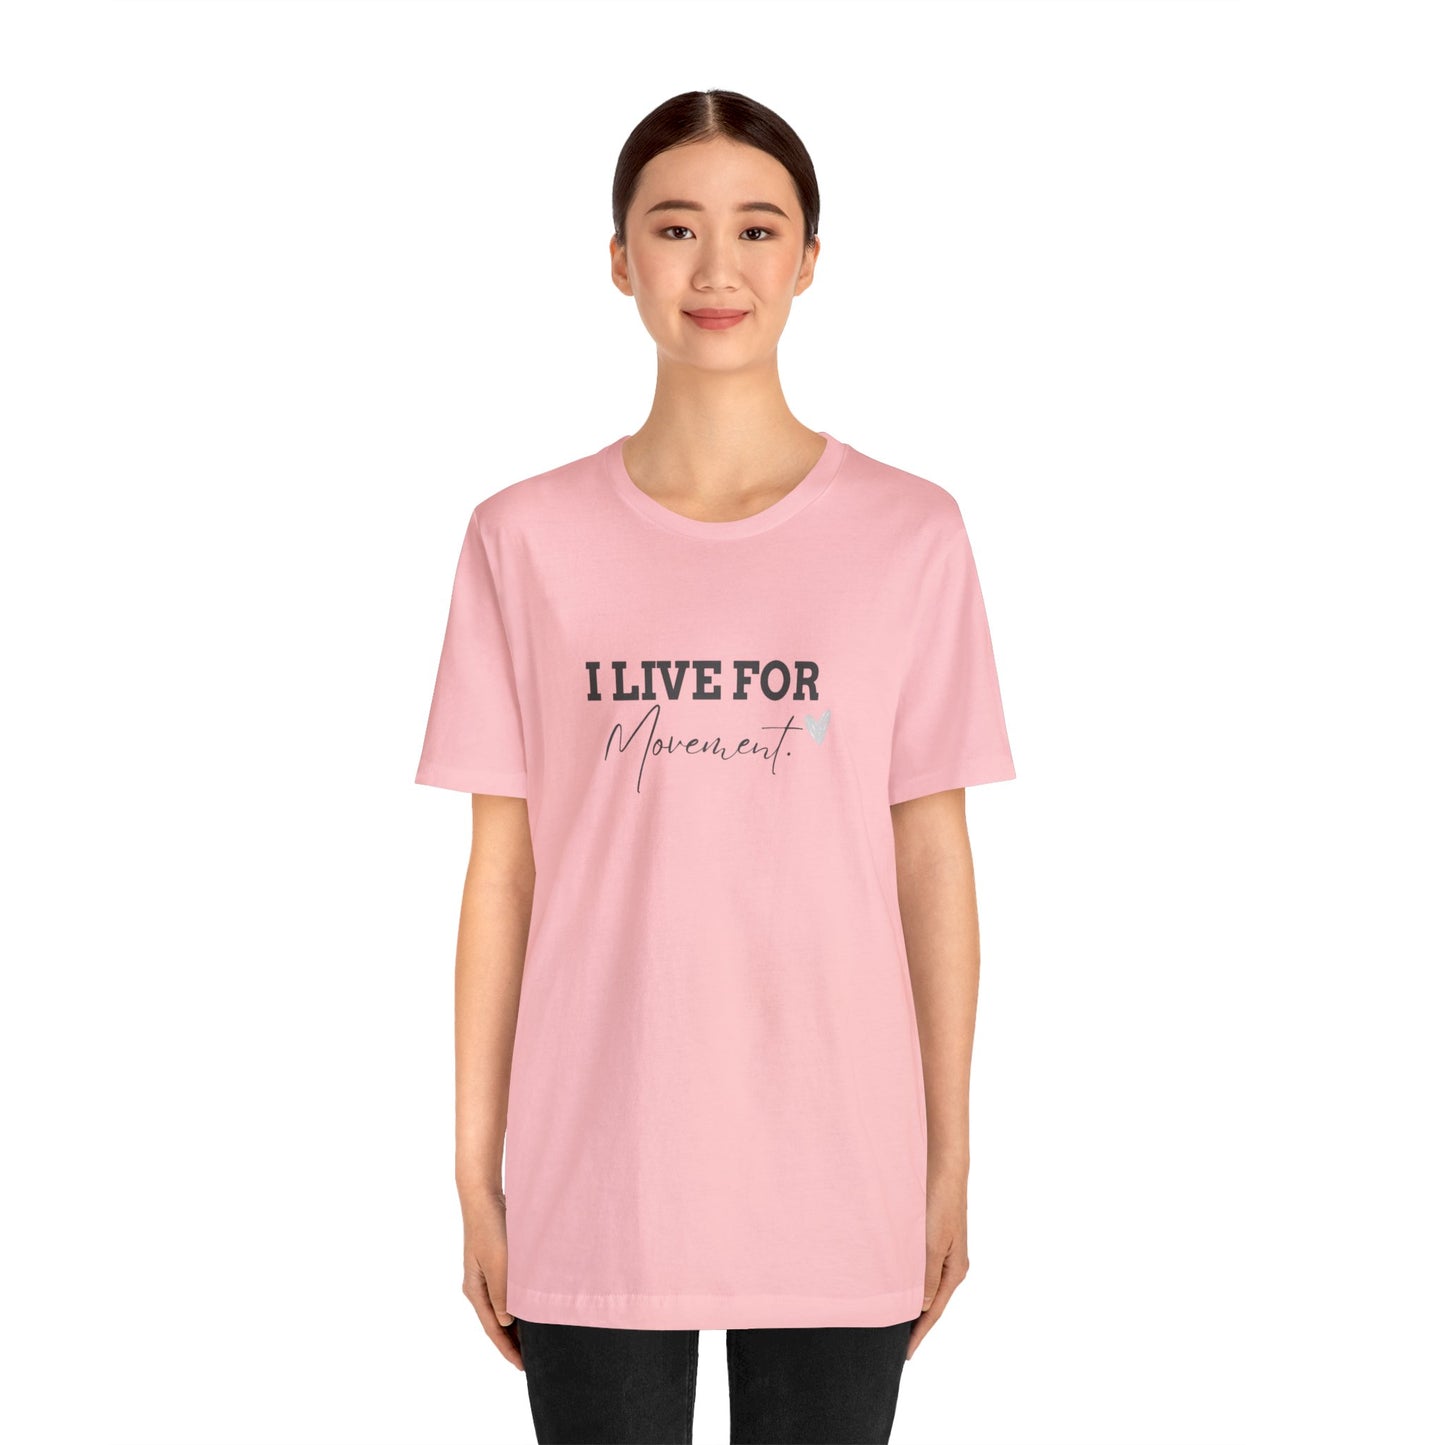 Dance shirt, love dance movement| gift for dancer or dance teacher